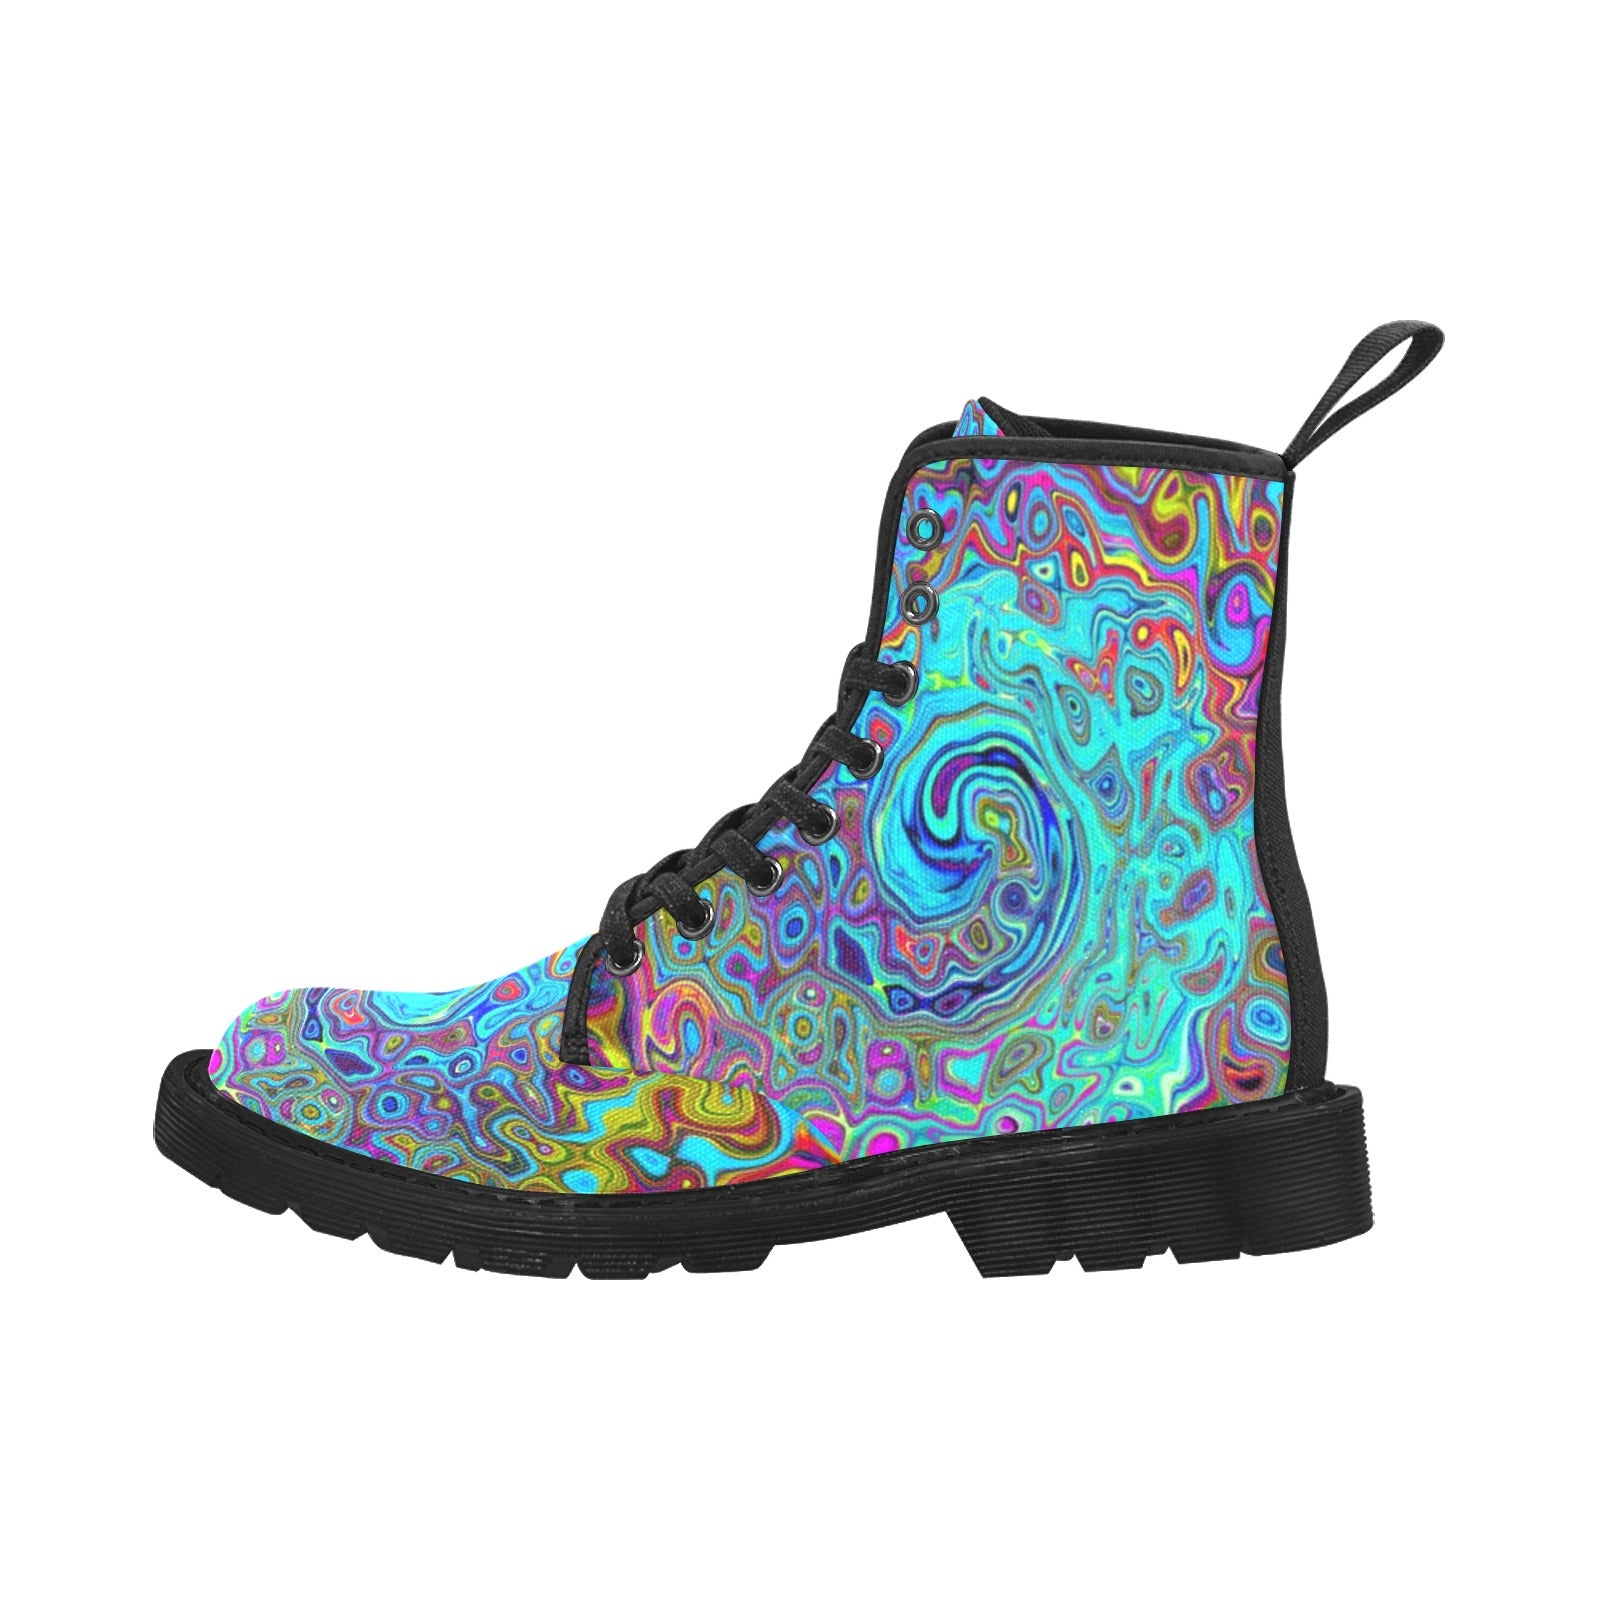 Boots for Women, Trippy Sky Blue Abstract Retro Liquid Swirl - Black